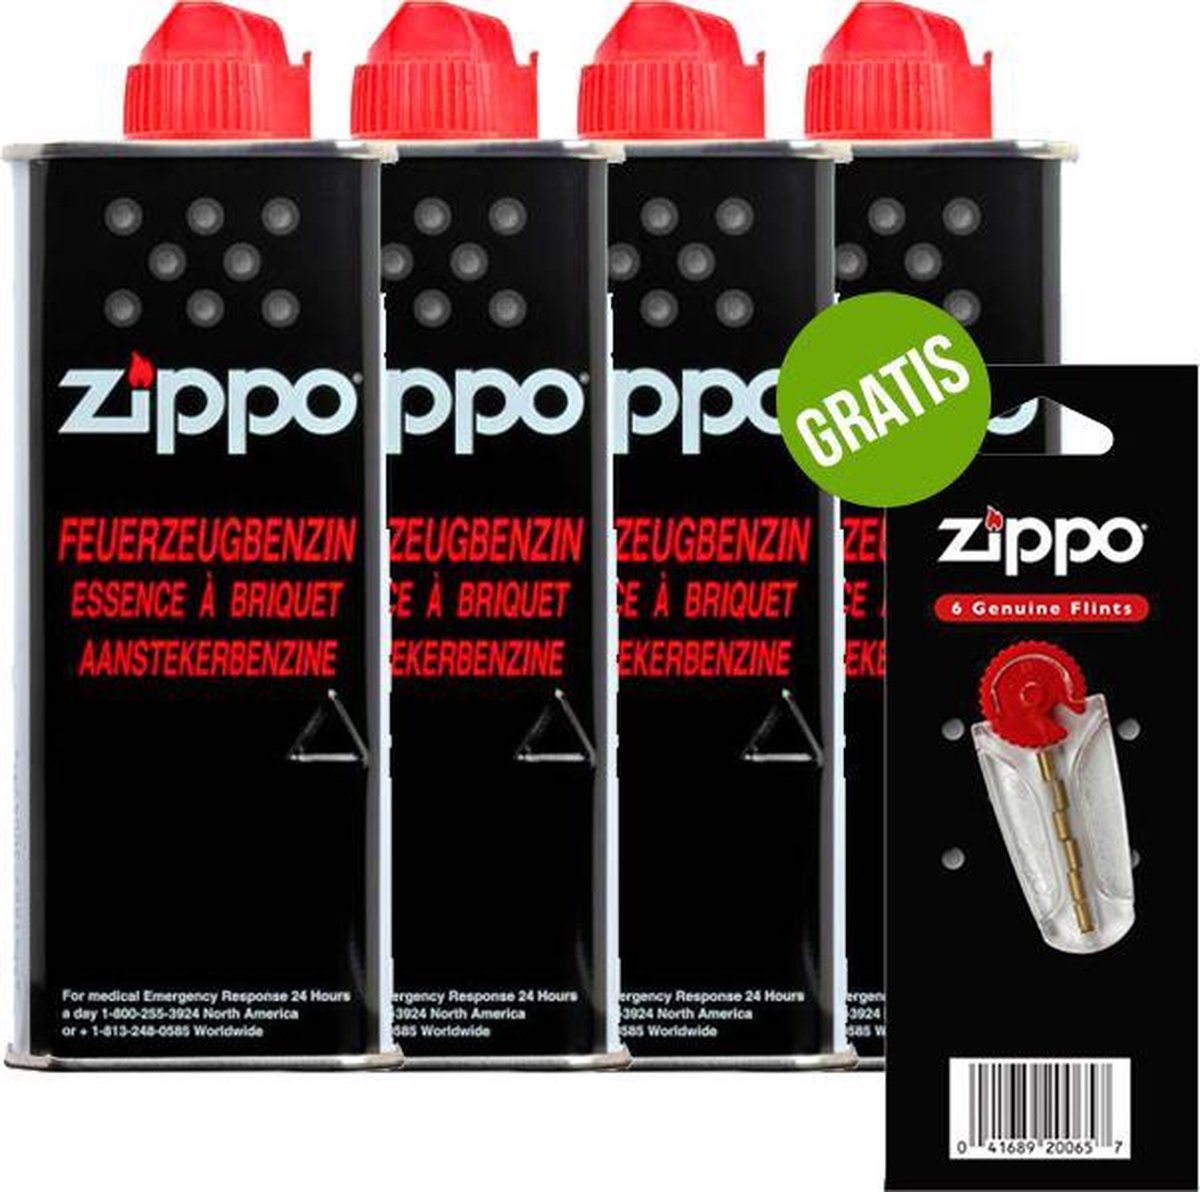 4 x briquet Zippo essence / liquide + silex gratuits